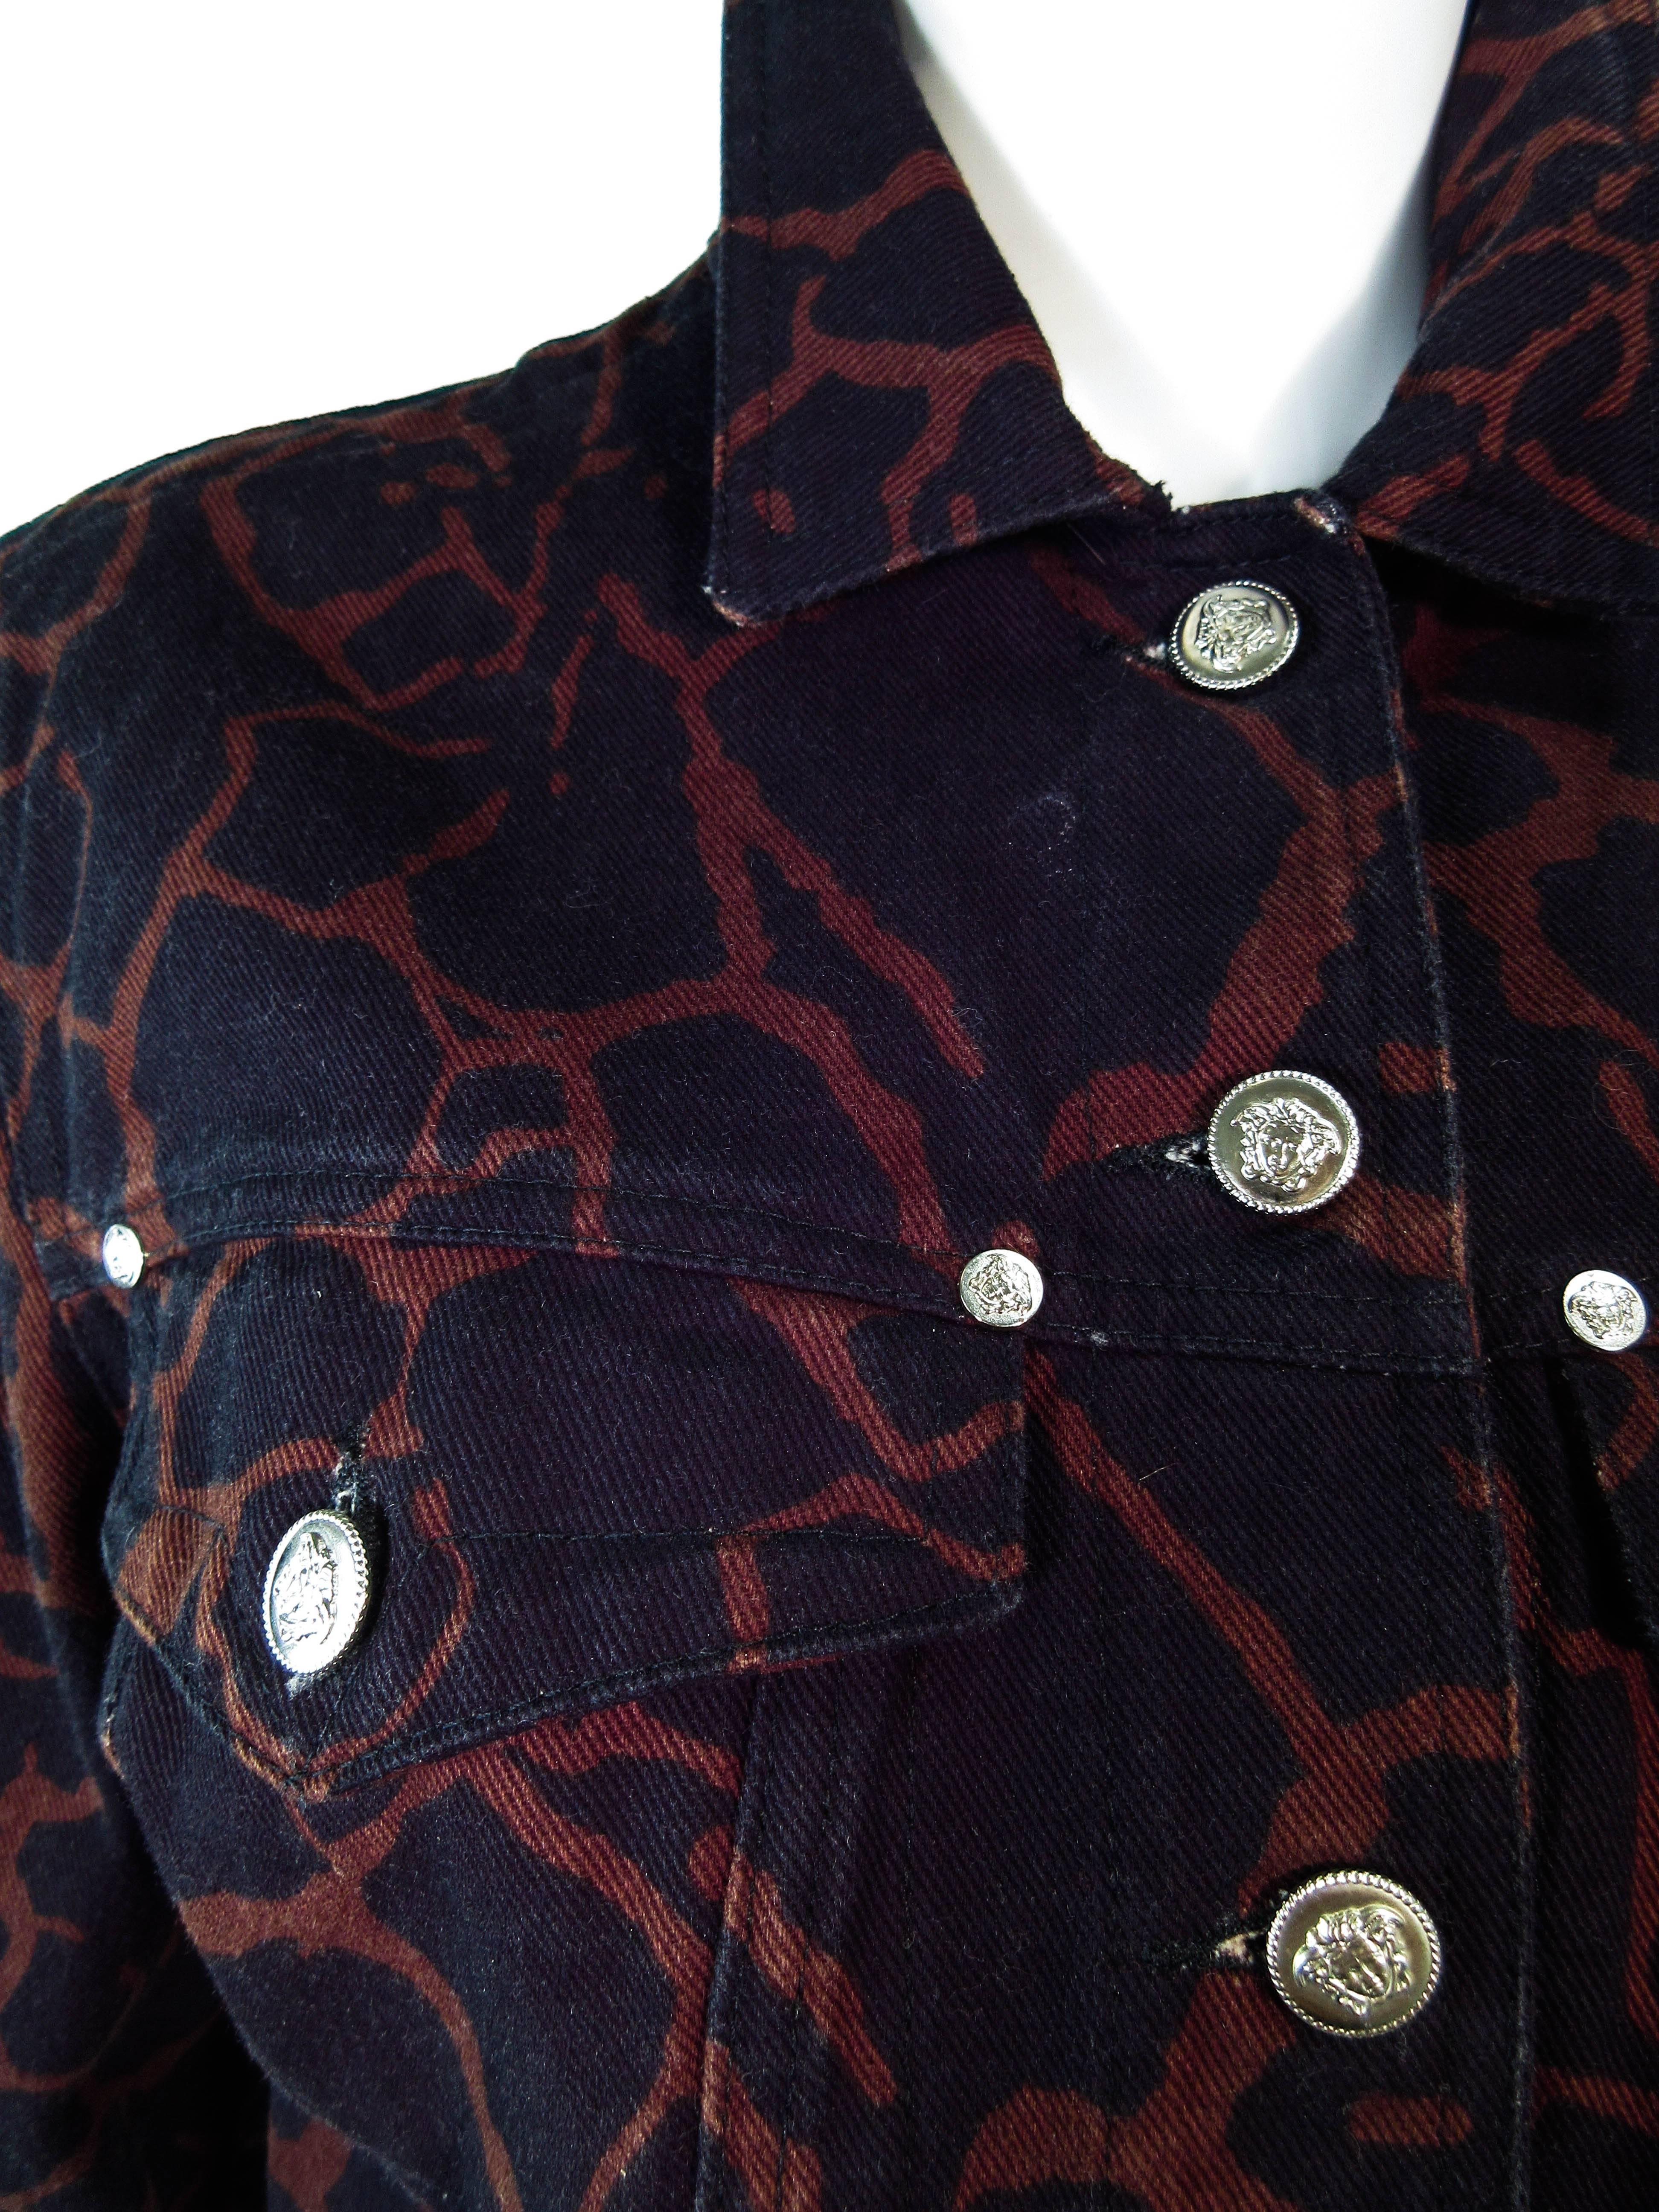 Women's or Men's VERSACE Vintage Black and Brown Giraffe Print Denim Jacket Size Medium